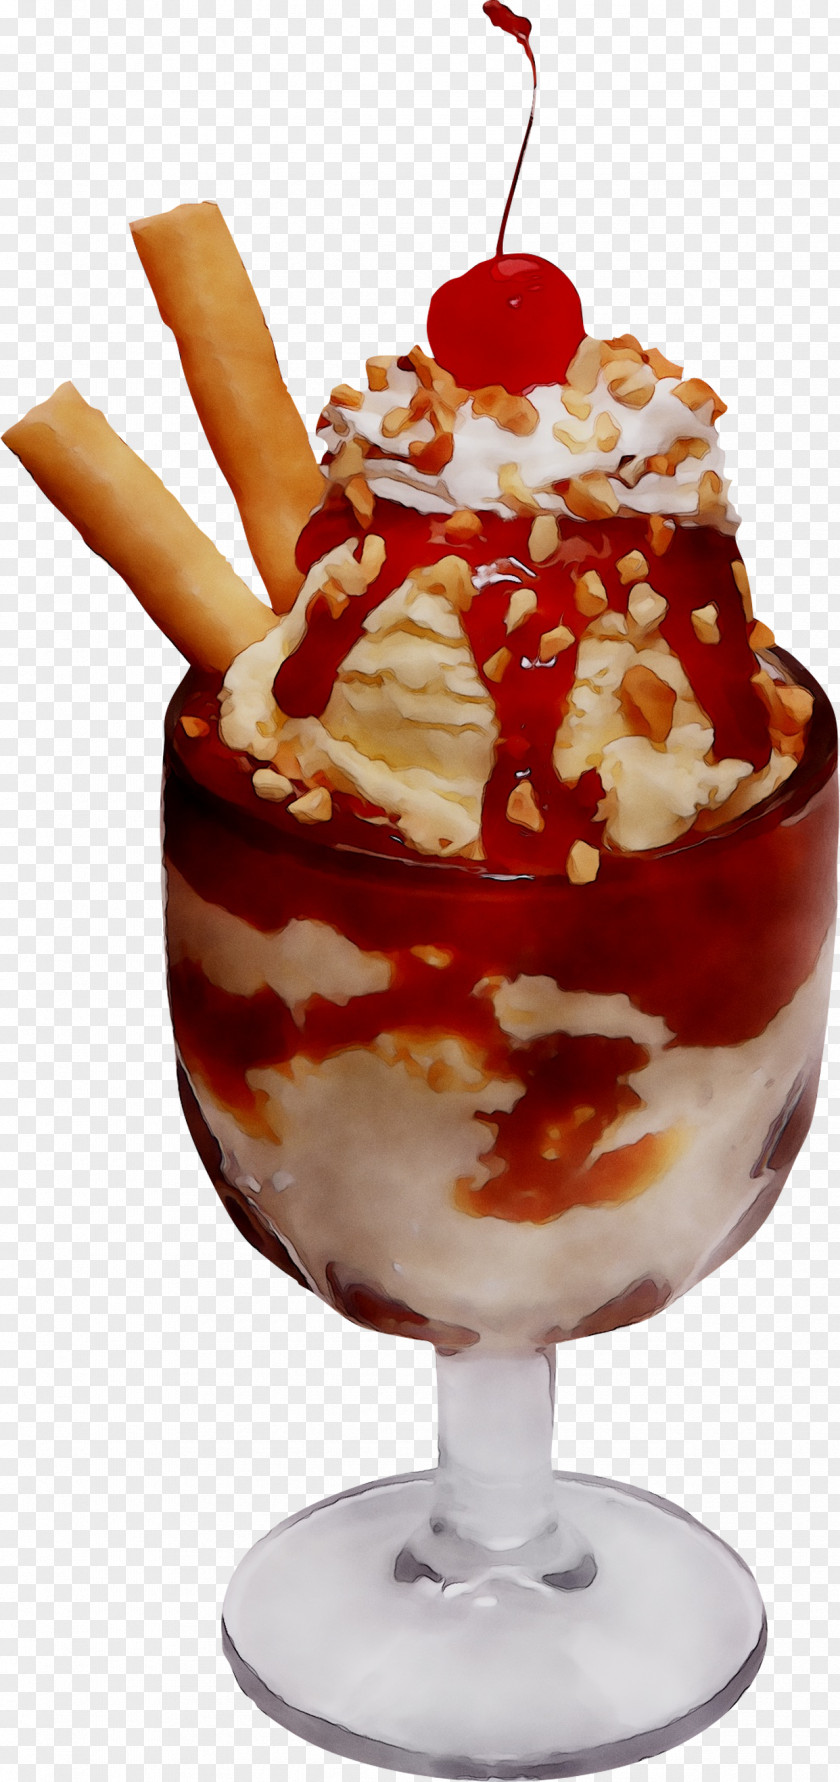 Sundae Ice Cream Gelato Knickerbocker Glory Dame Blanche PNG